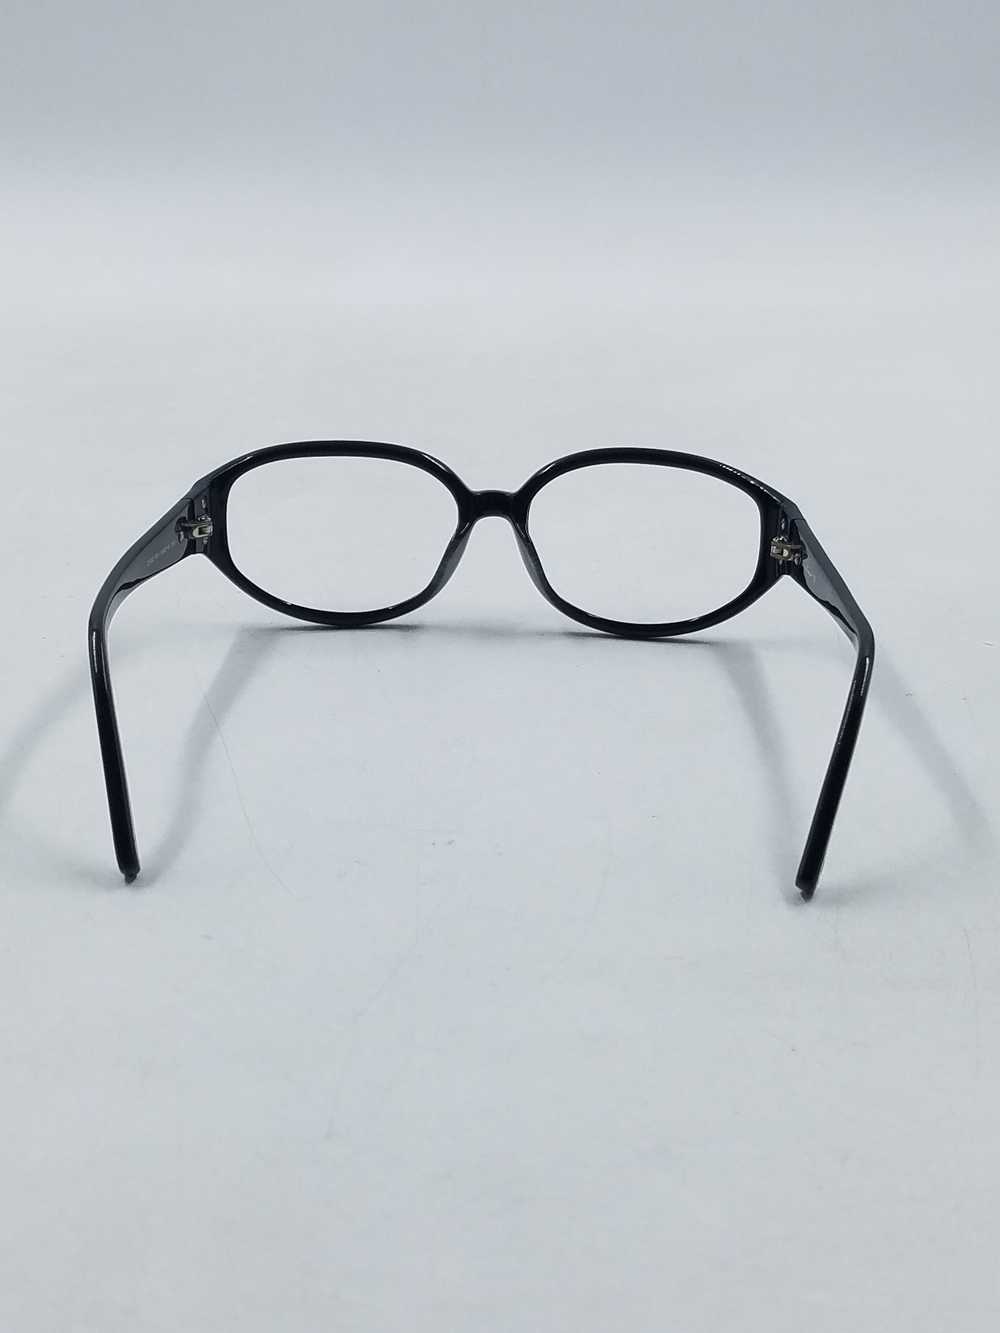 Salvatore Ferragamo Oval Black Eyeglasses - image 3